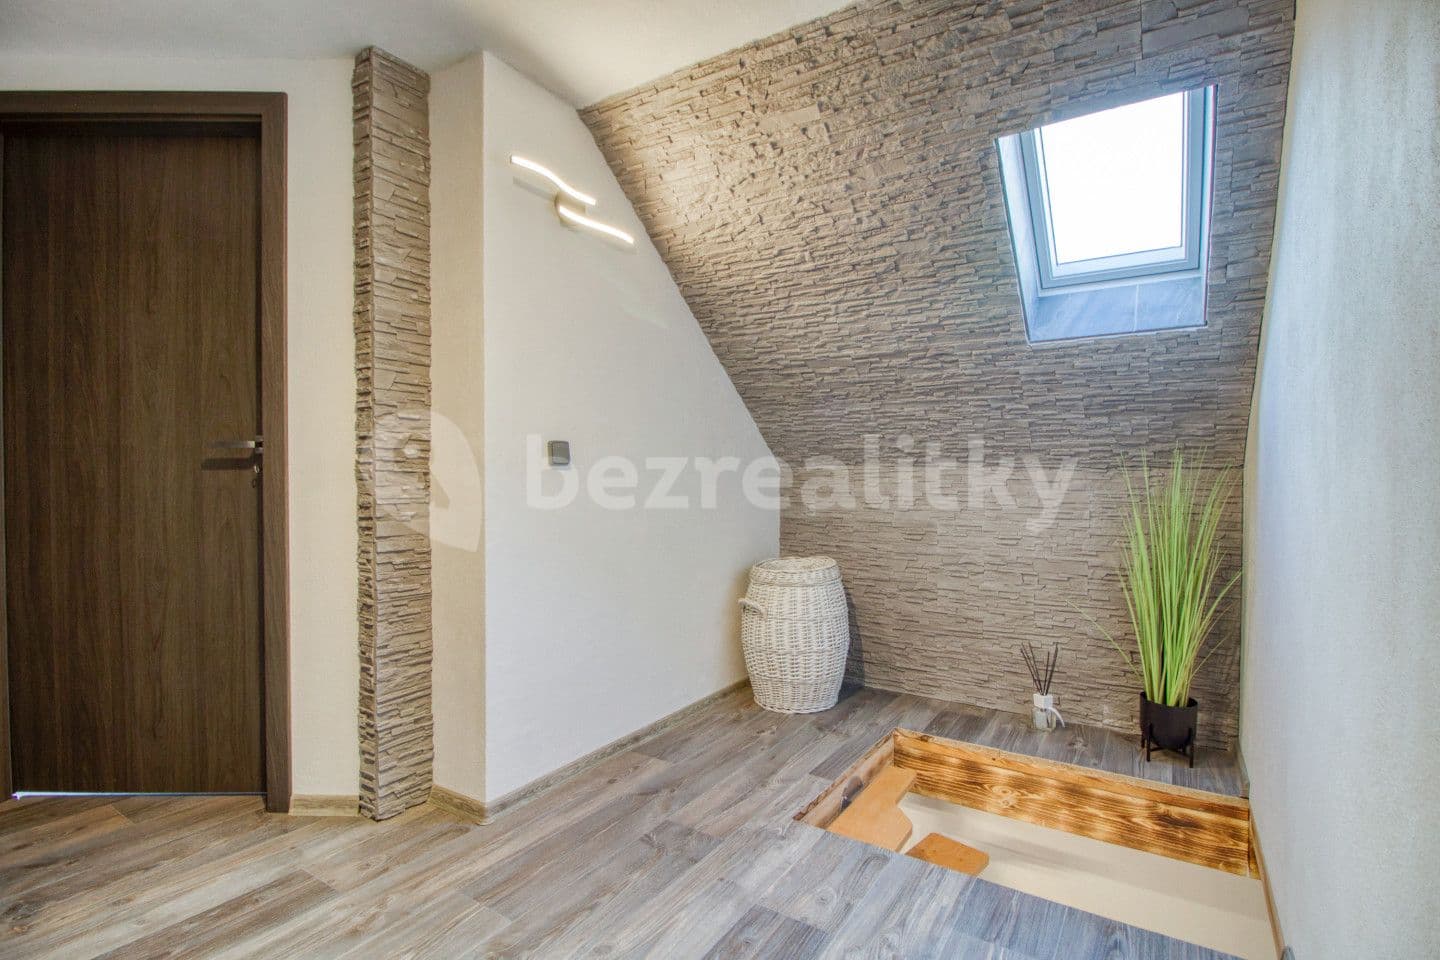 Predaj domu 102 m², pozemek 208 m², Puclice, Plzeňský kraj